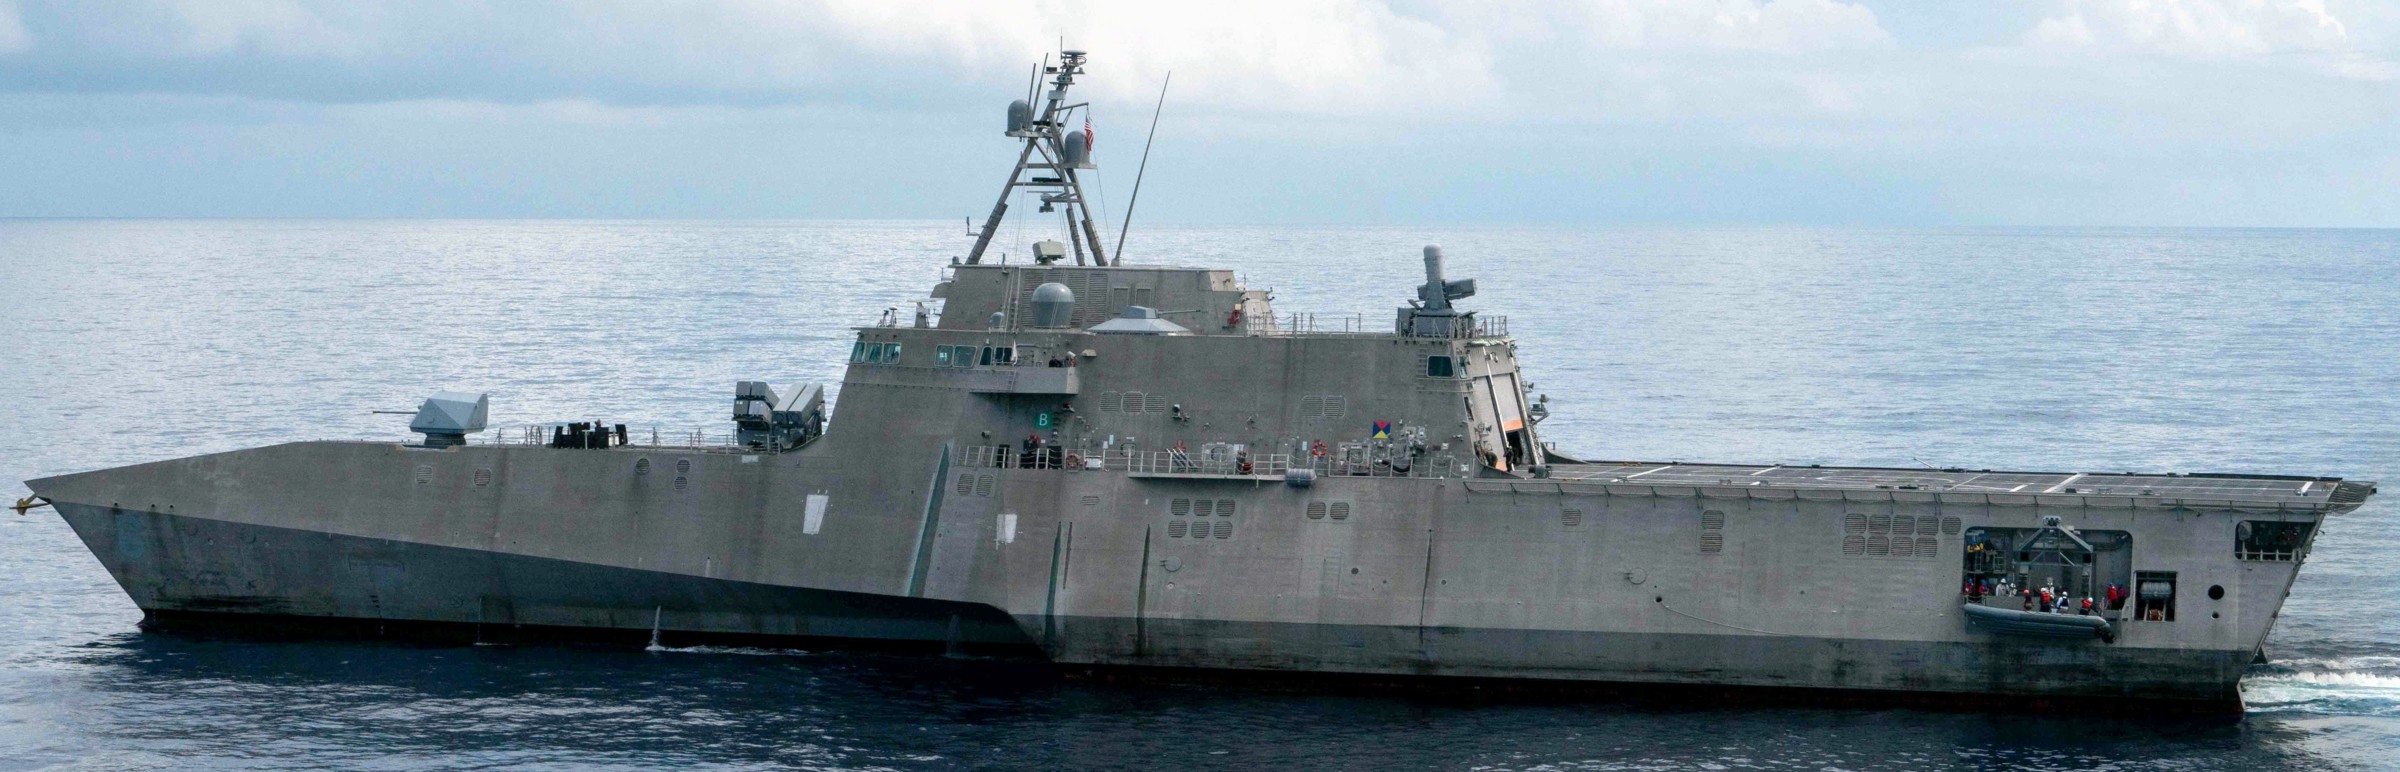 lcs-6 uss jackson independence class littoral combat ship us navy 46